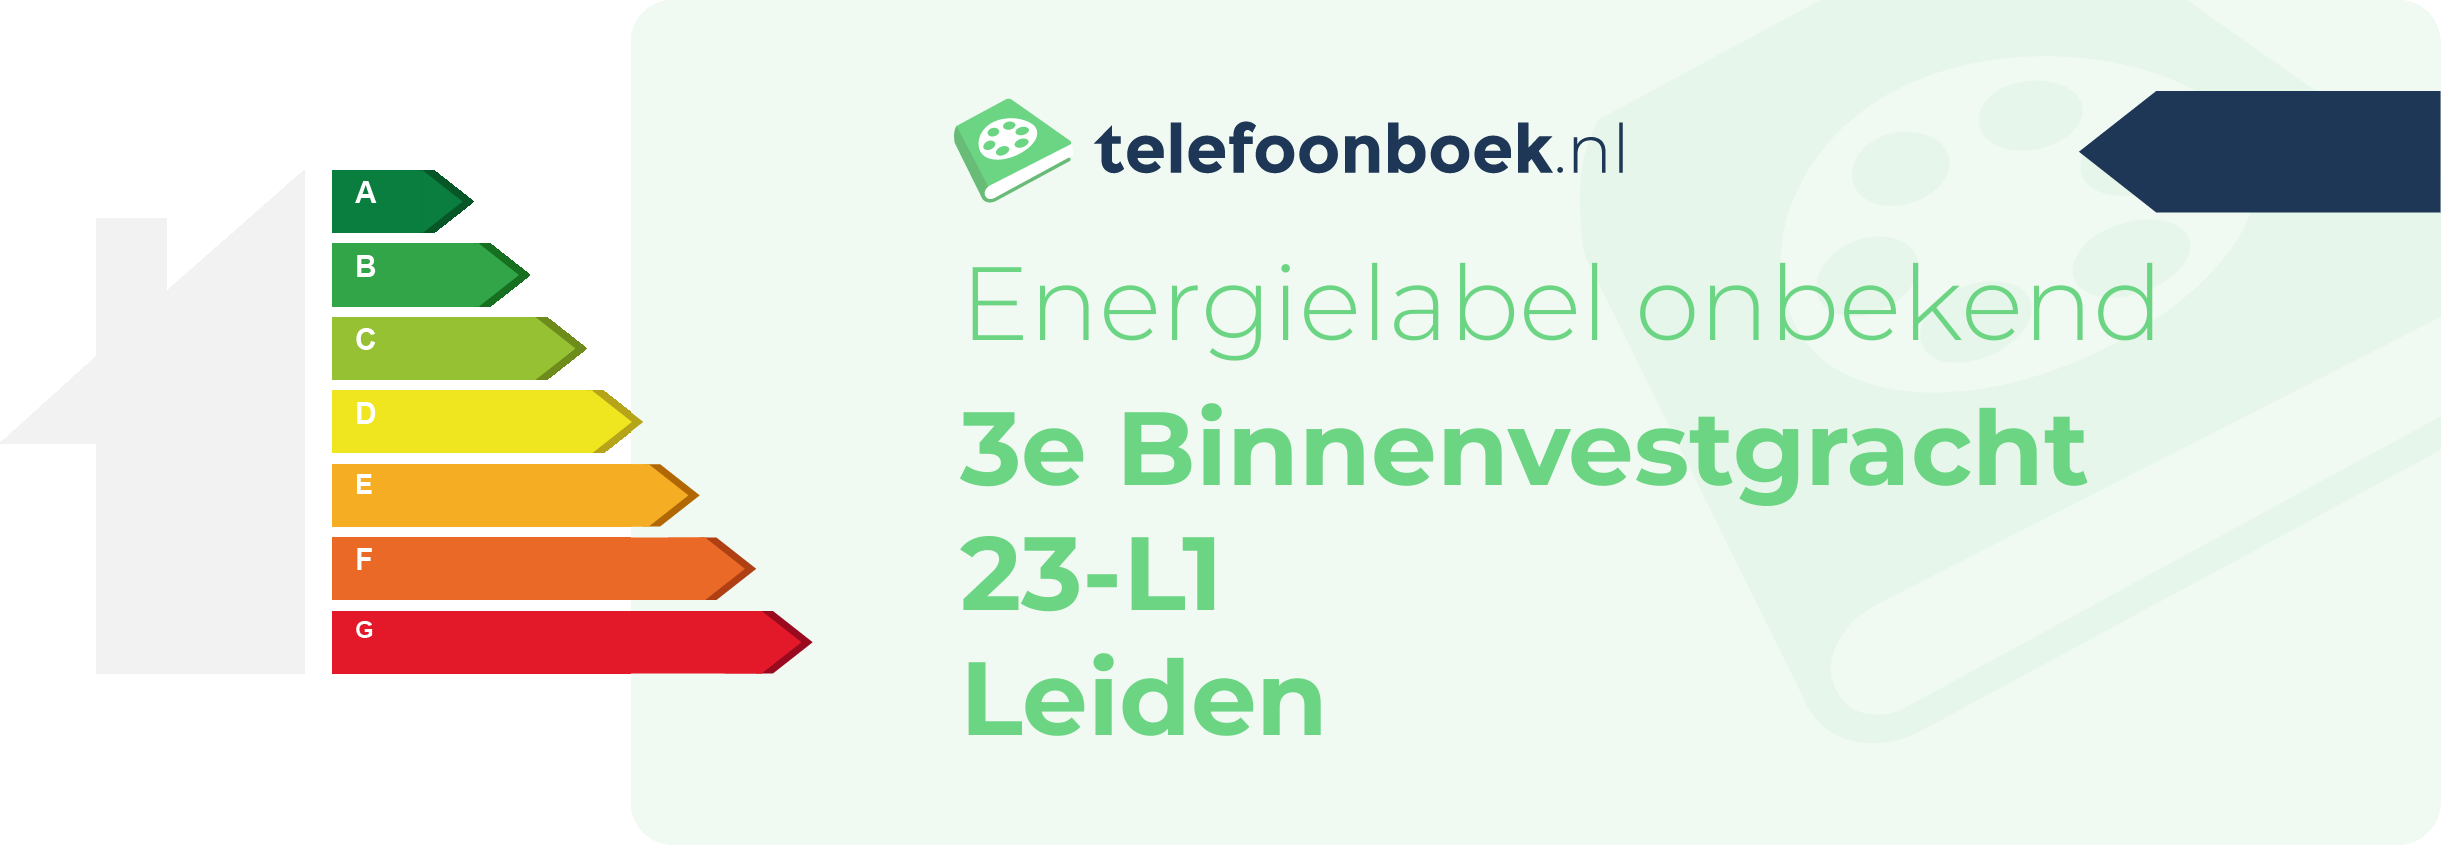 Energielabel 3e Binnenvestgracht 23-L1 Leiden